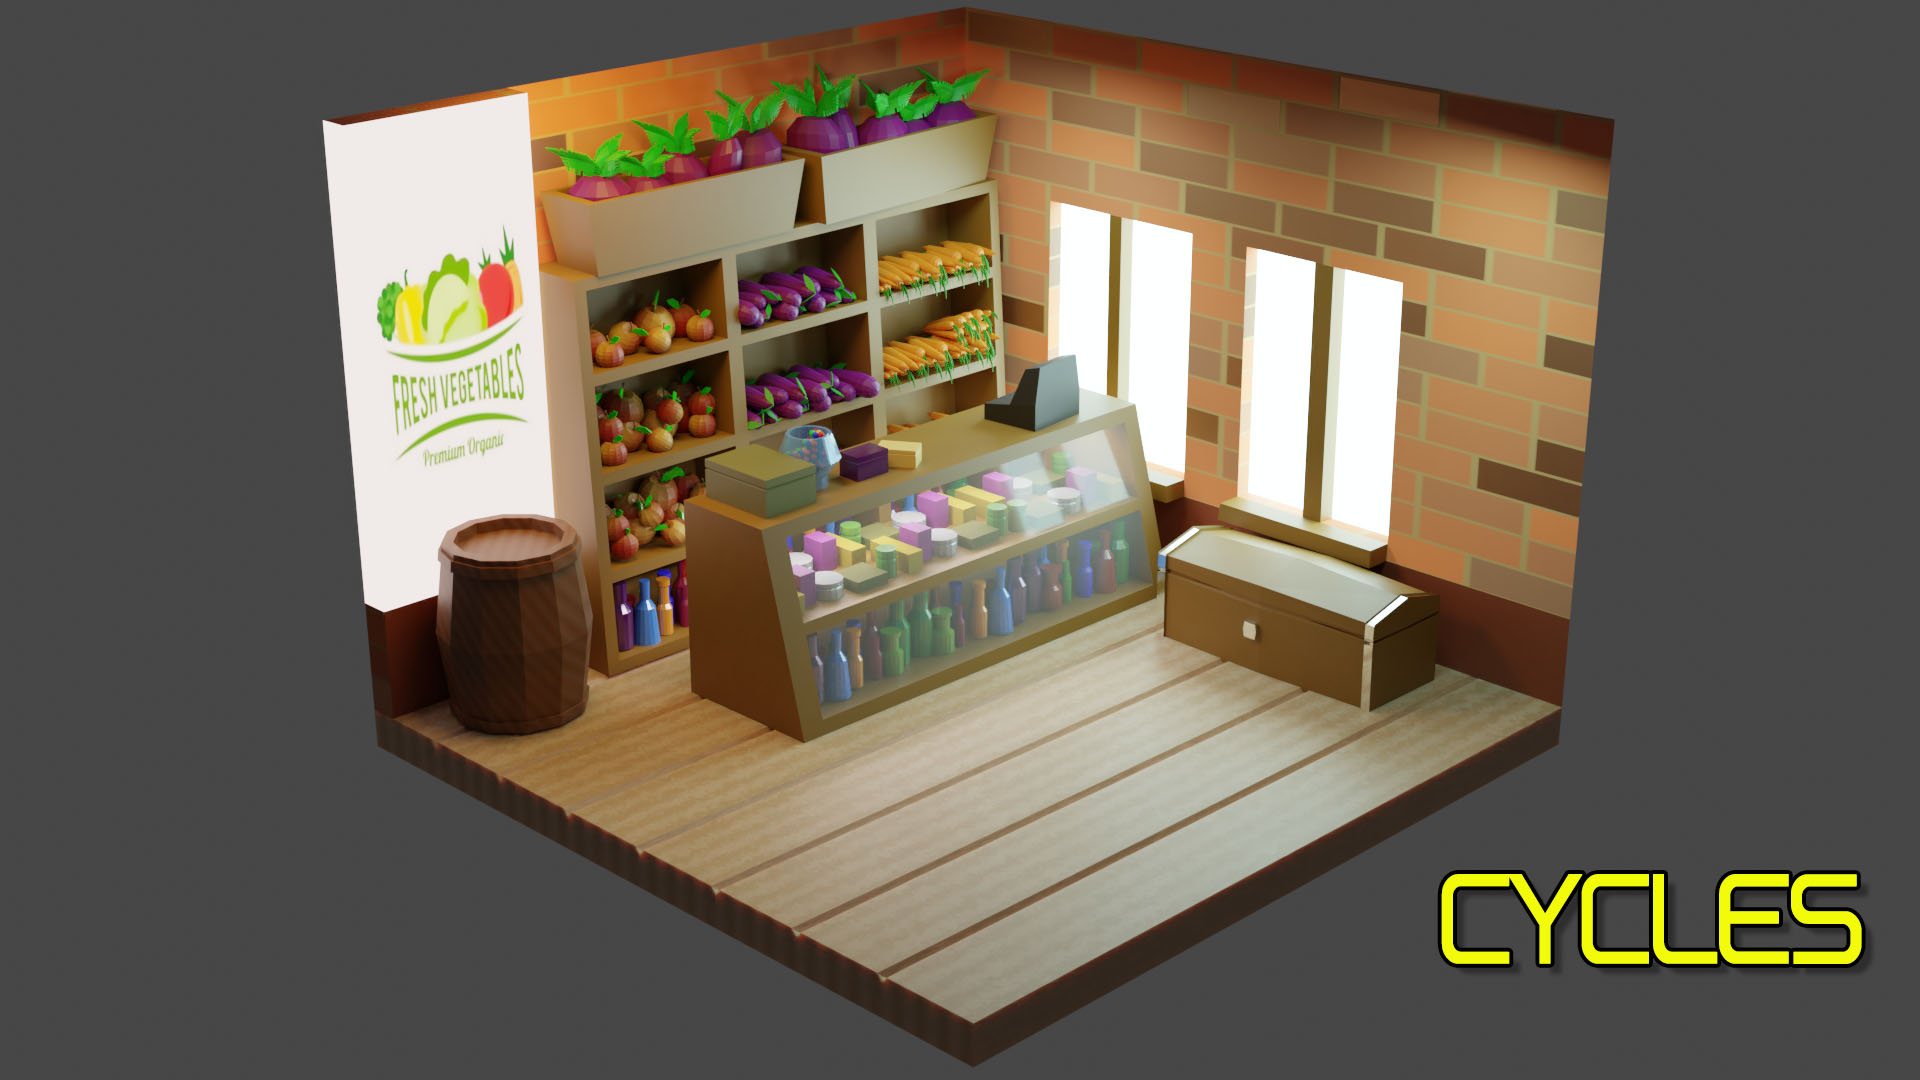 Vegets Shop. (A basso numero di poligoni) in Blender cycles render immagine